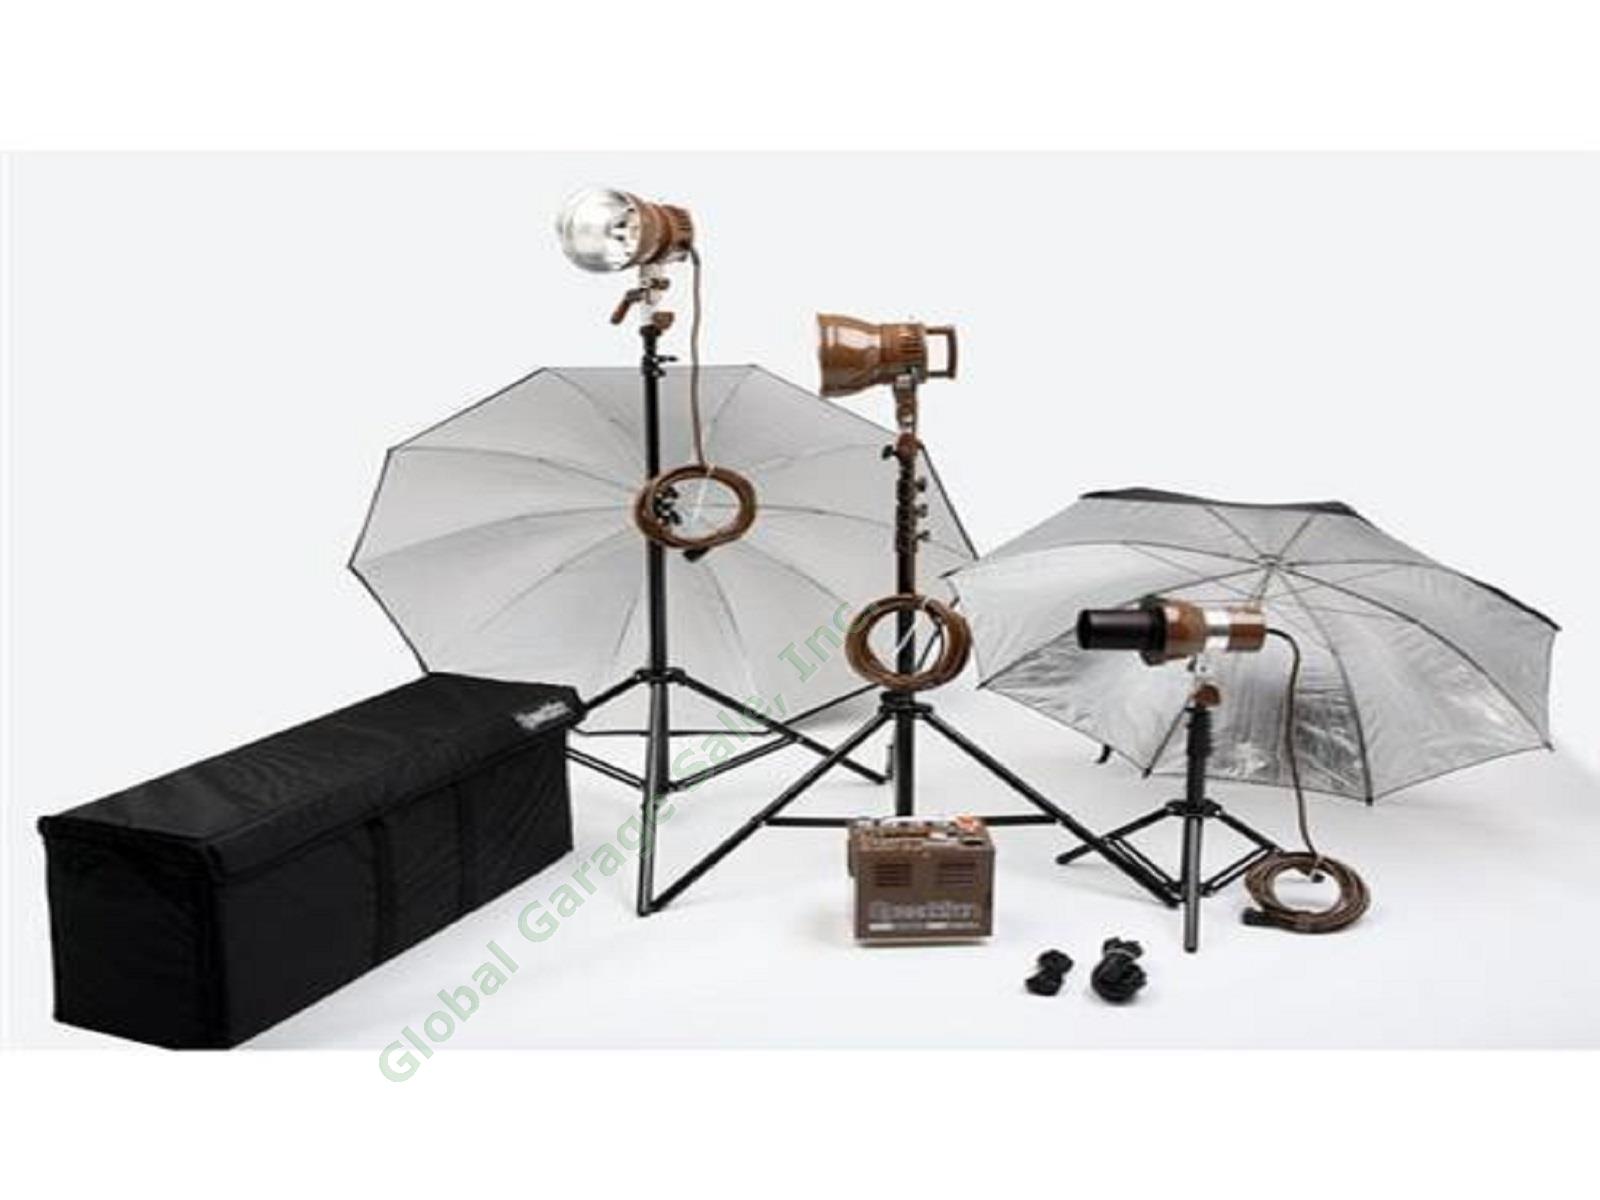 Speedotron DM802B Pro Camera Photo Studio Flash Kit 3 Heads Umbrellas Snoot EXC!